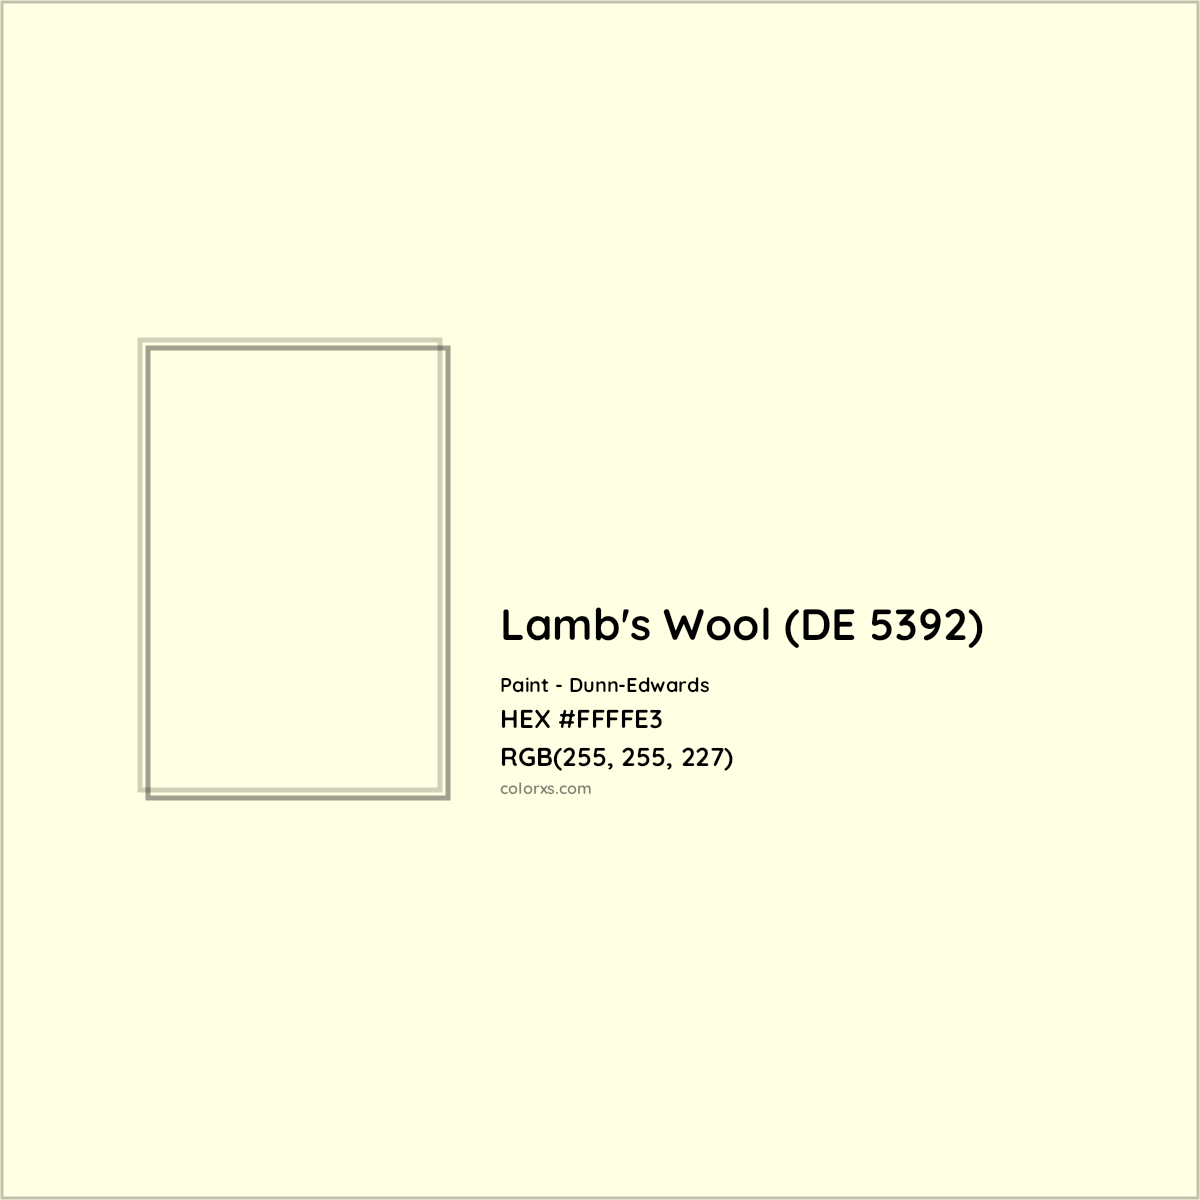 HEX #FFFFE3 Lamb's Wool (DE 5392) Paint Dunn-Edwards - Color Code